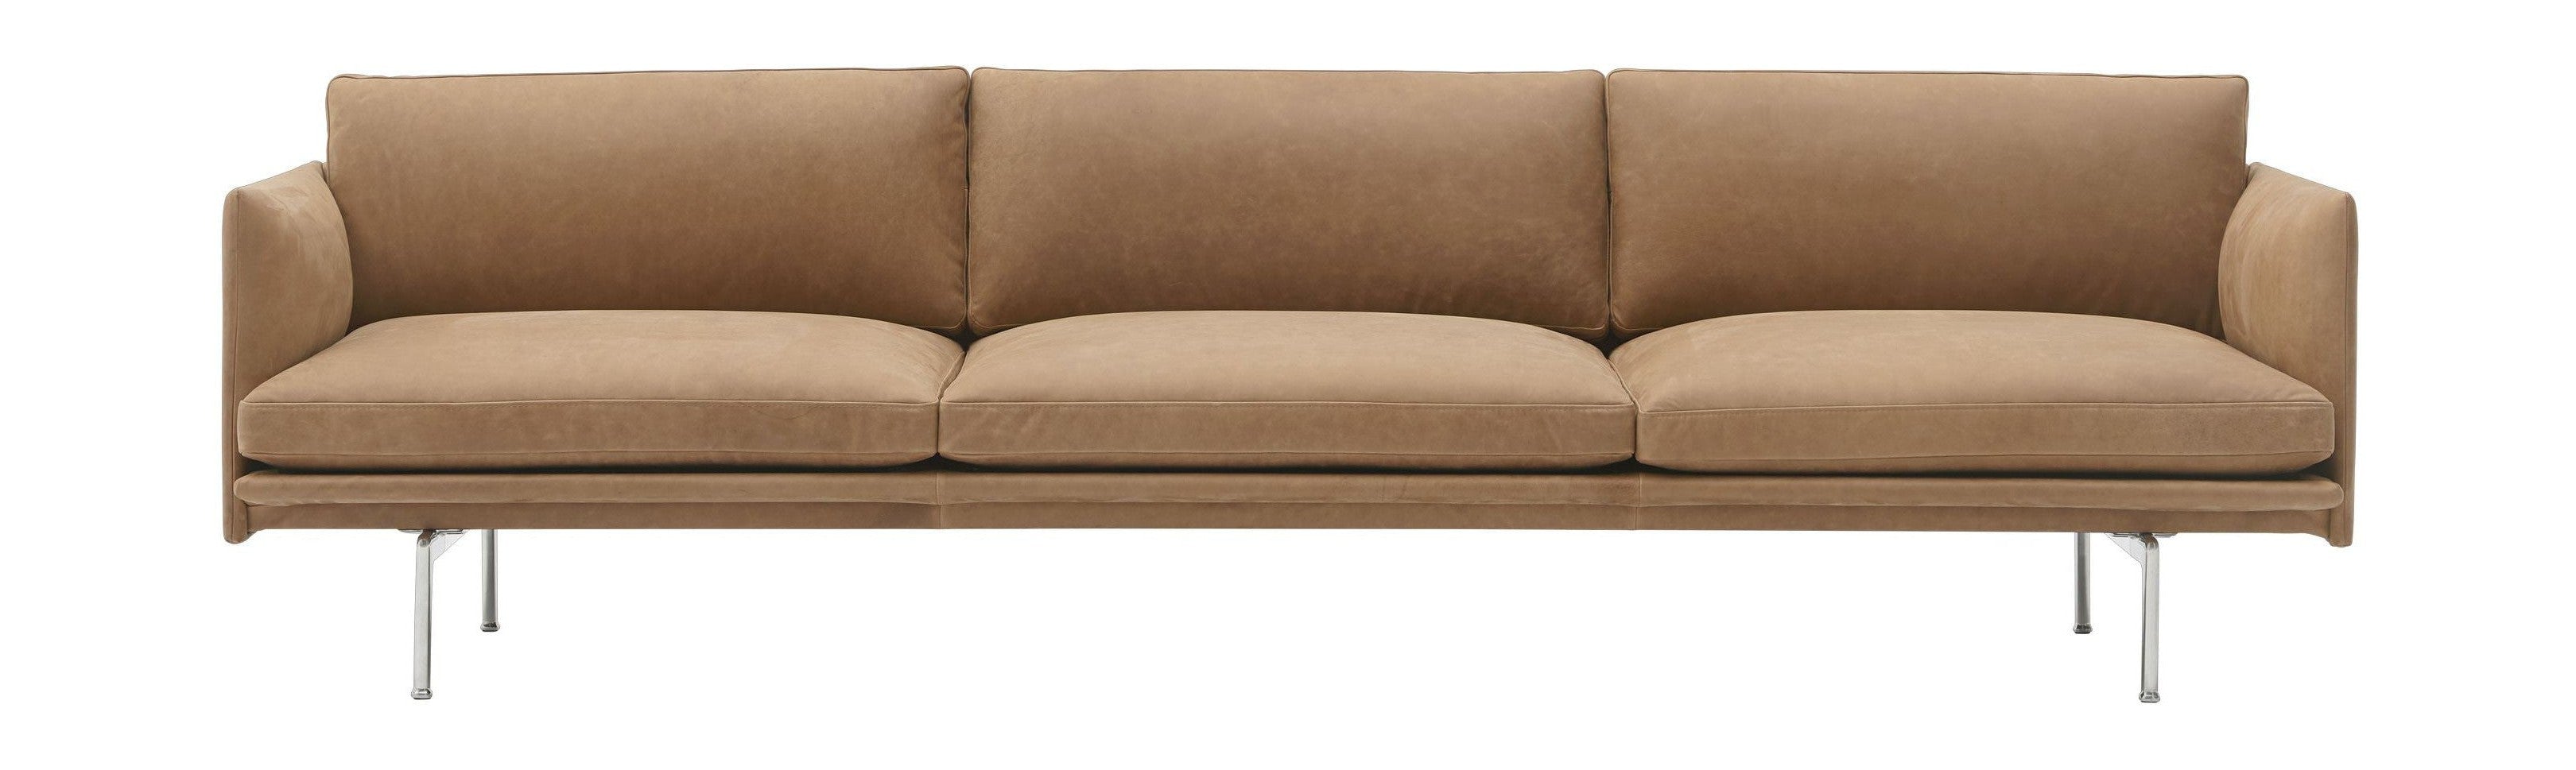 Muuto disposisjon sofa 3 seters nåde skinn, kamel/aluminium